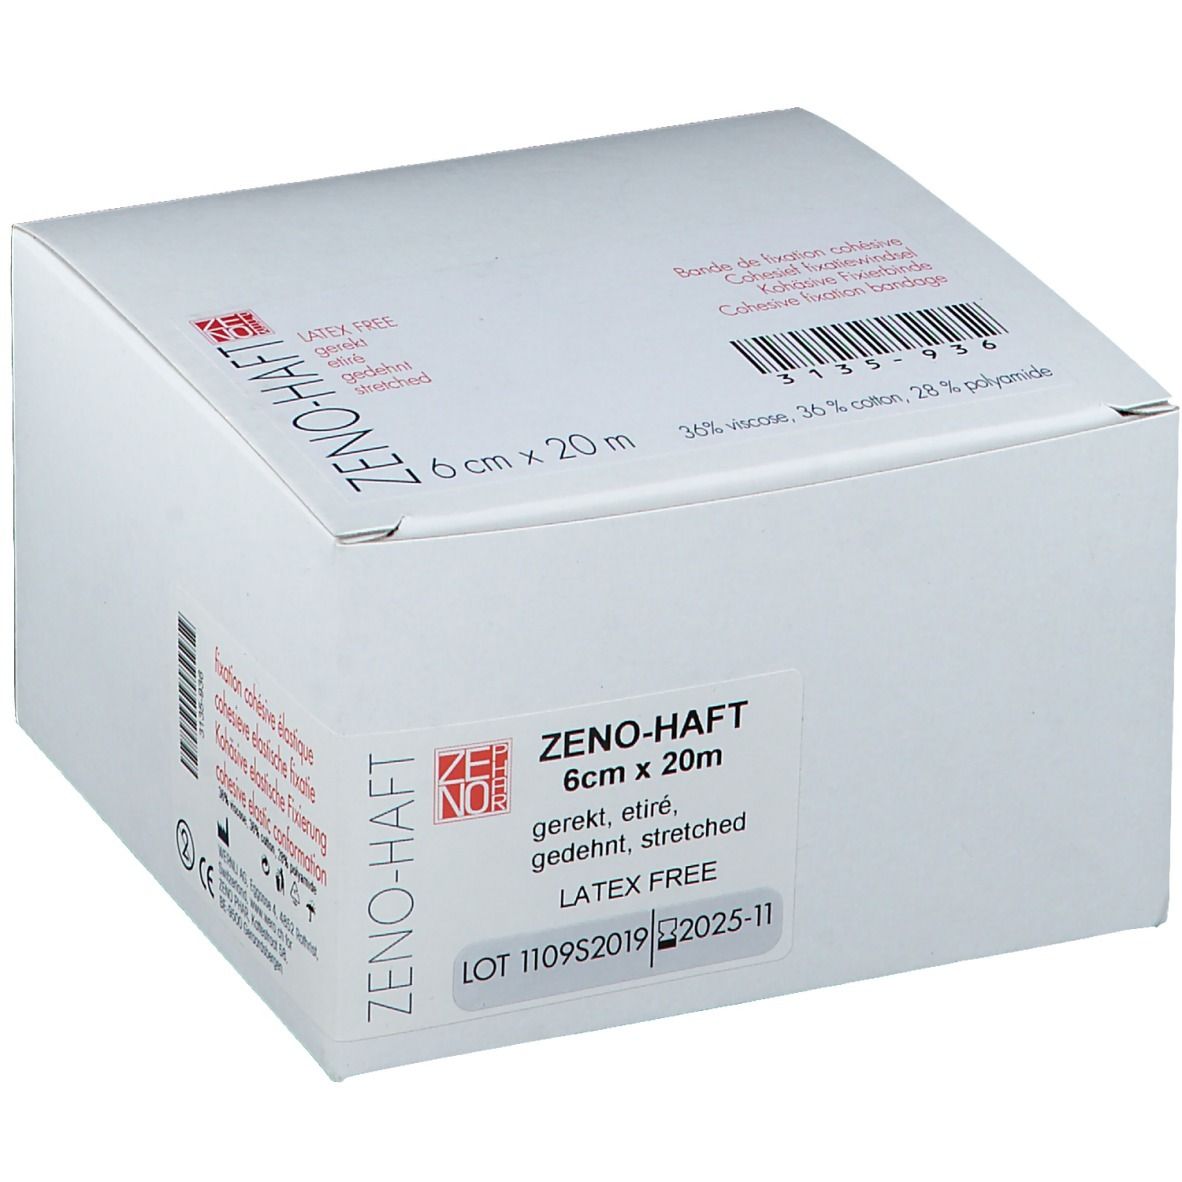 Zeno-Haft Cohesive Bandage Elastisch Latex Free 6cmx20m